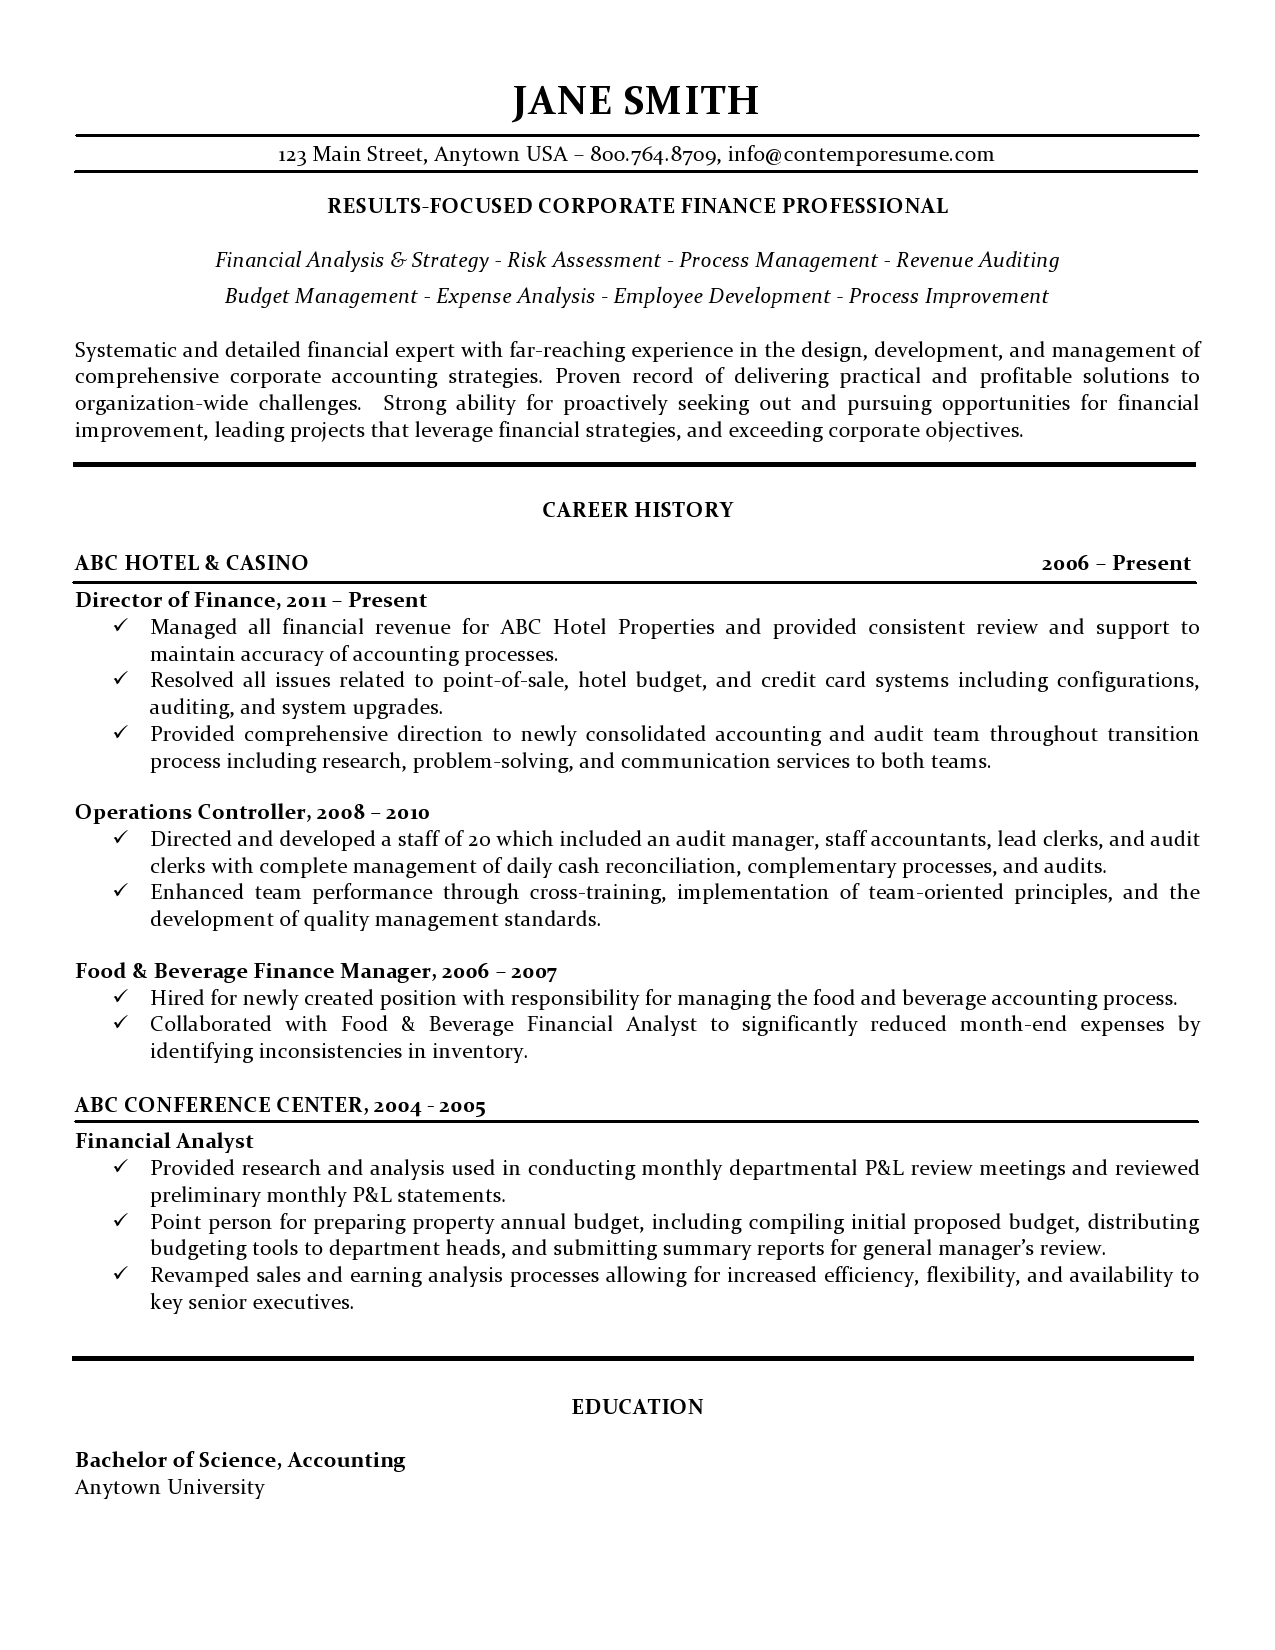 Sample Resume Of An Executive Finance Corporate Finance Resume